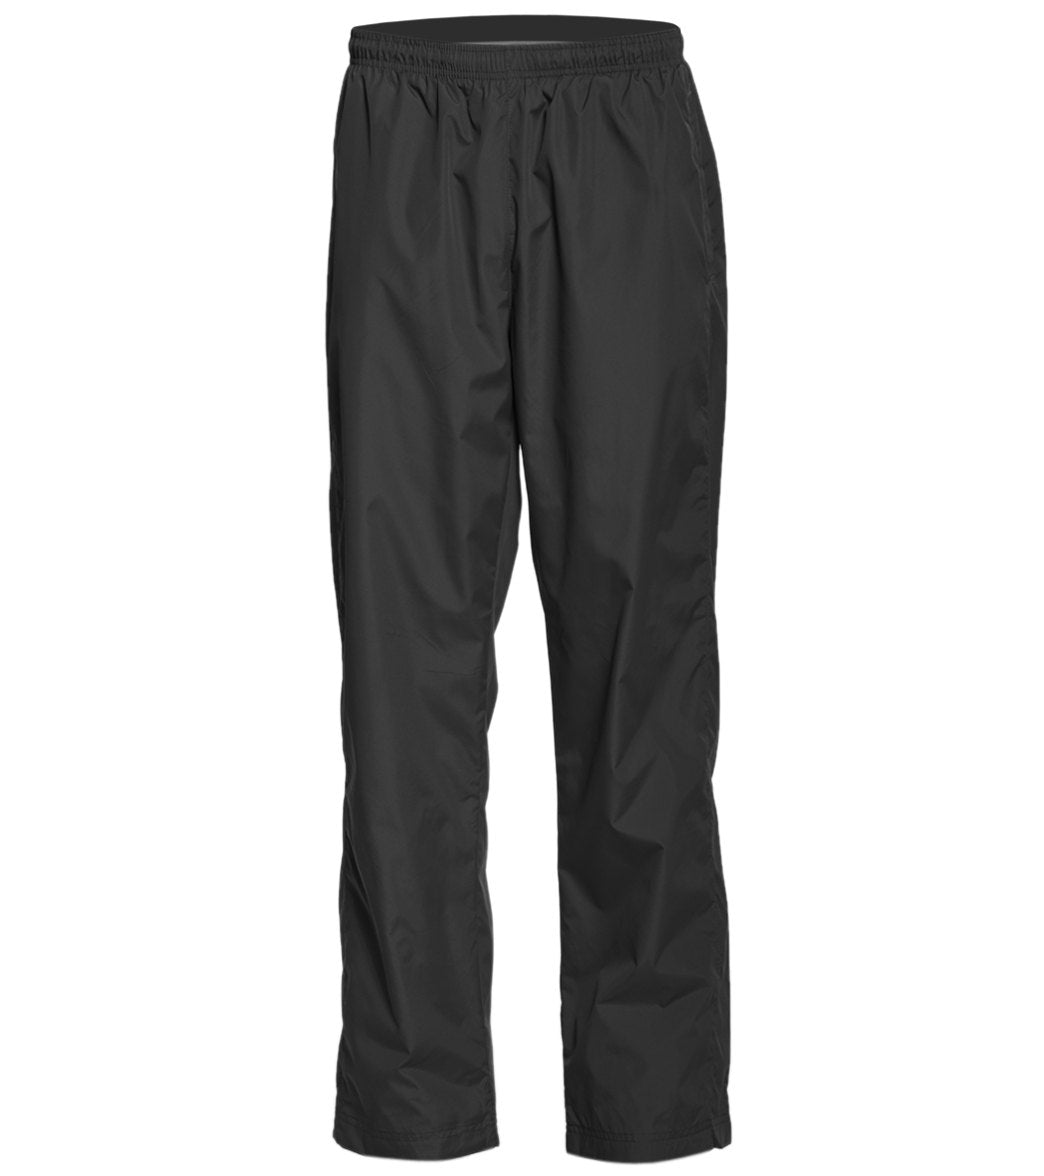 Women's Warm Up Pants - Black Xl Polyester - Swimoutlet.com